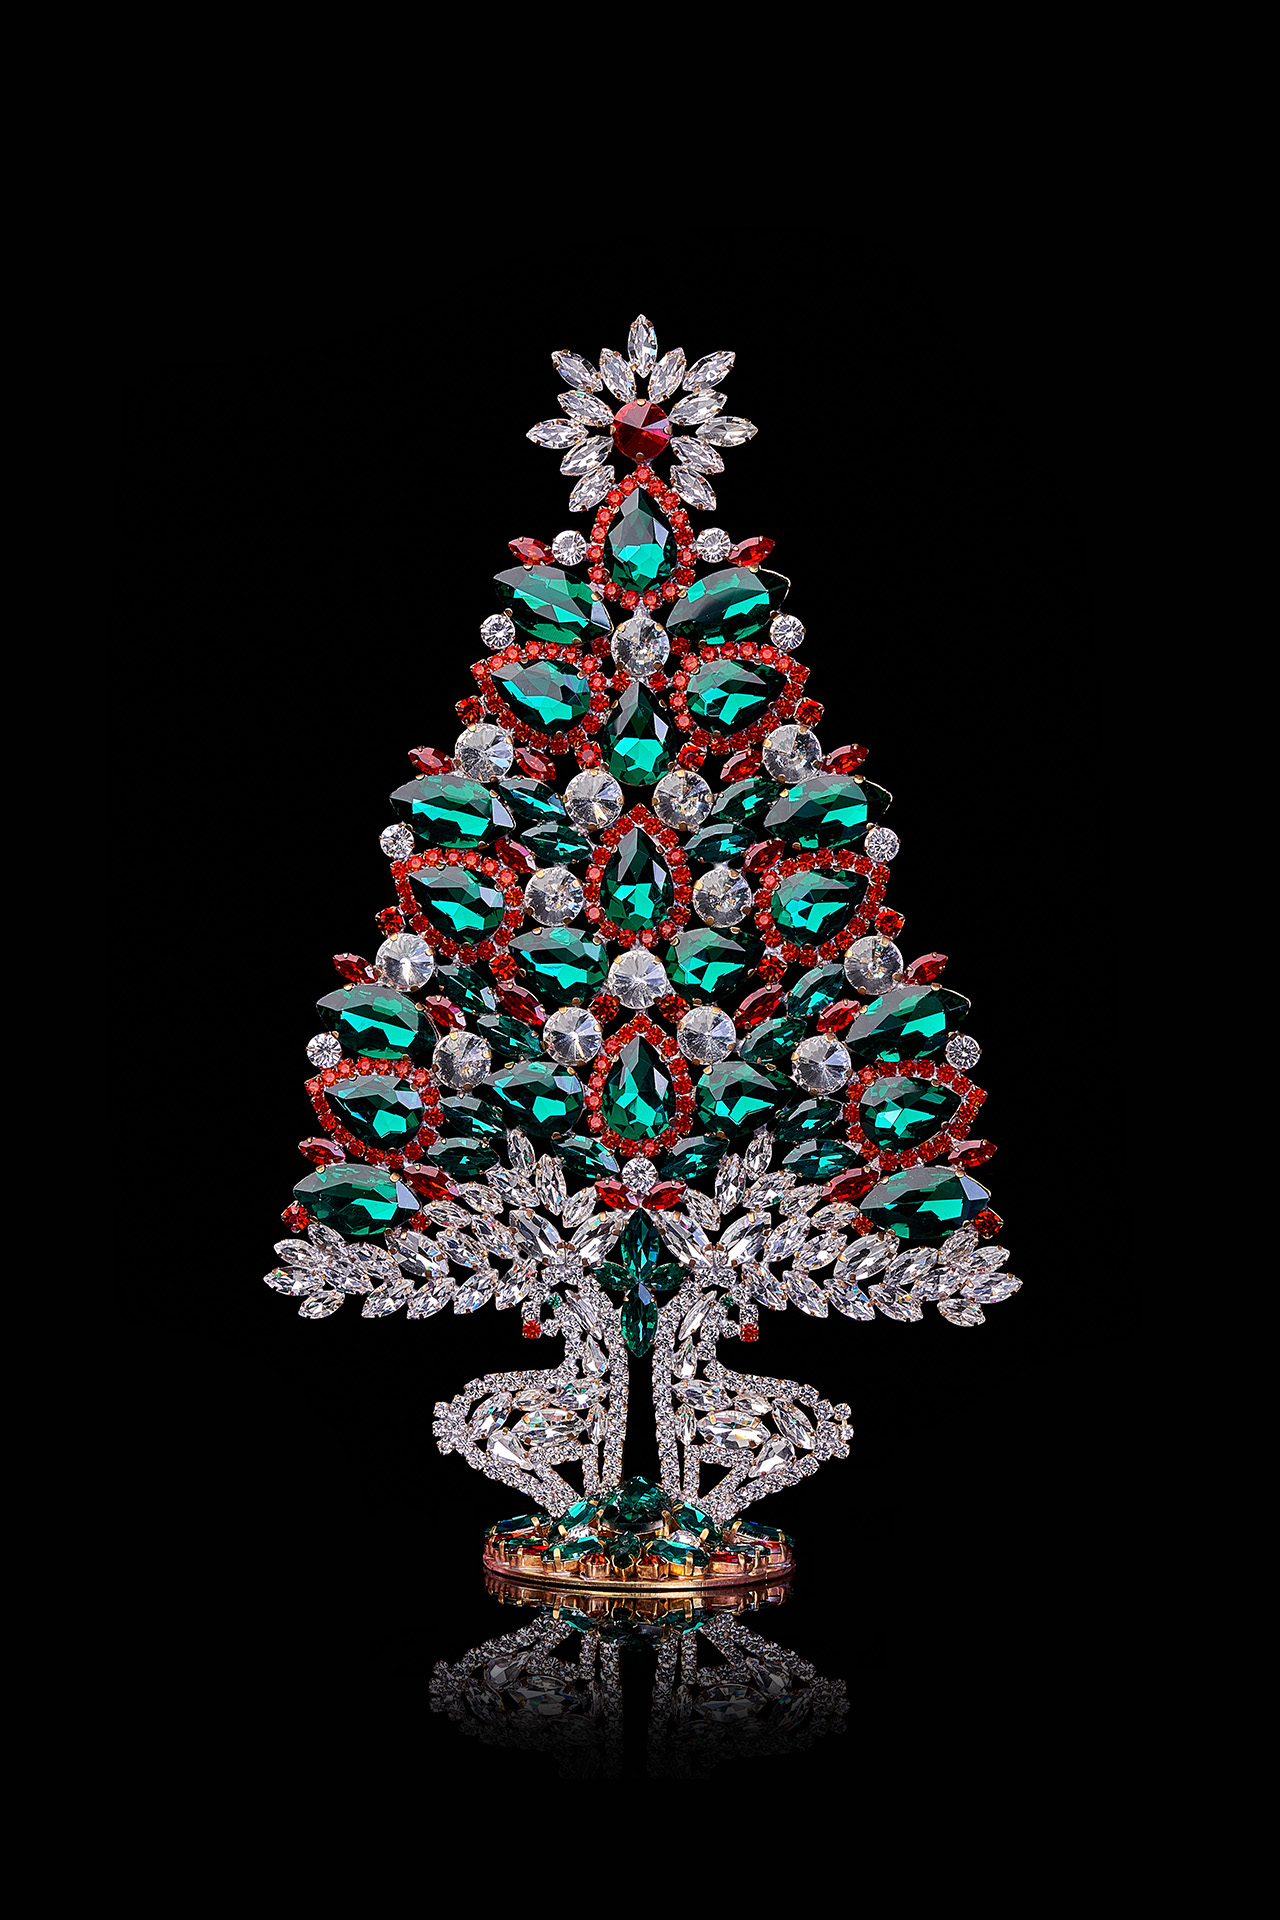 Czech handmade tabletop Christmas tree  from colored rhinestones